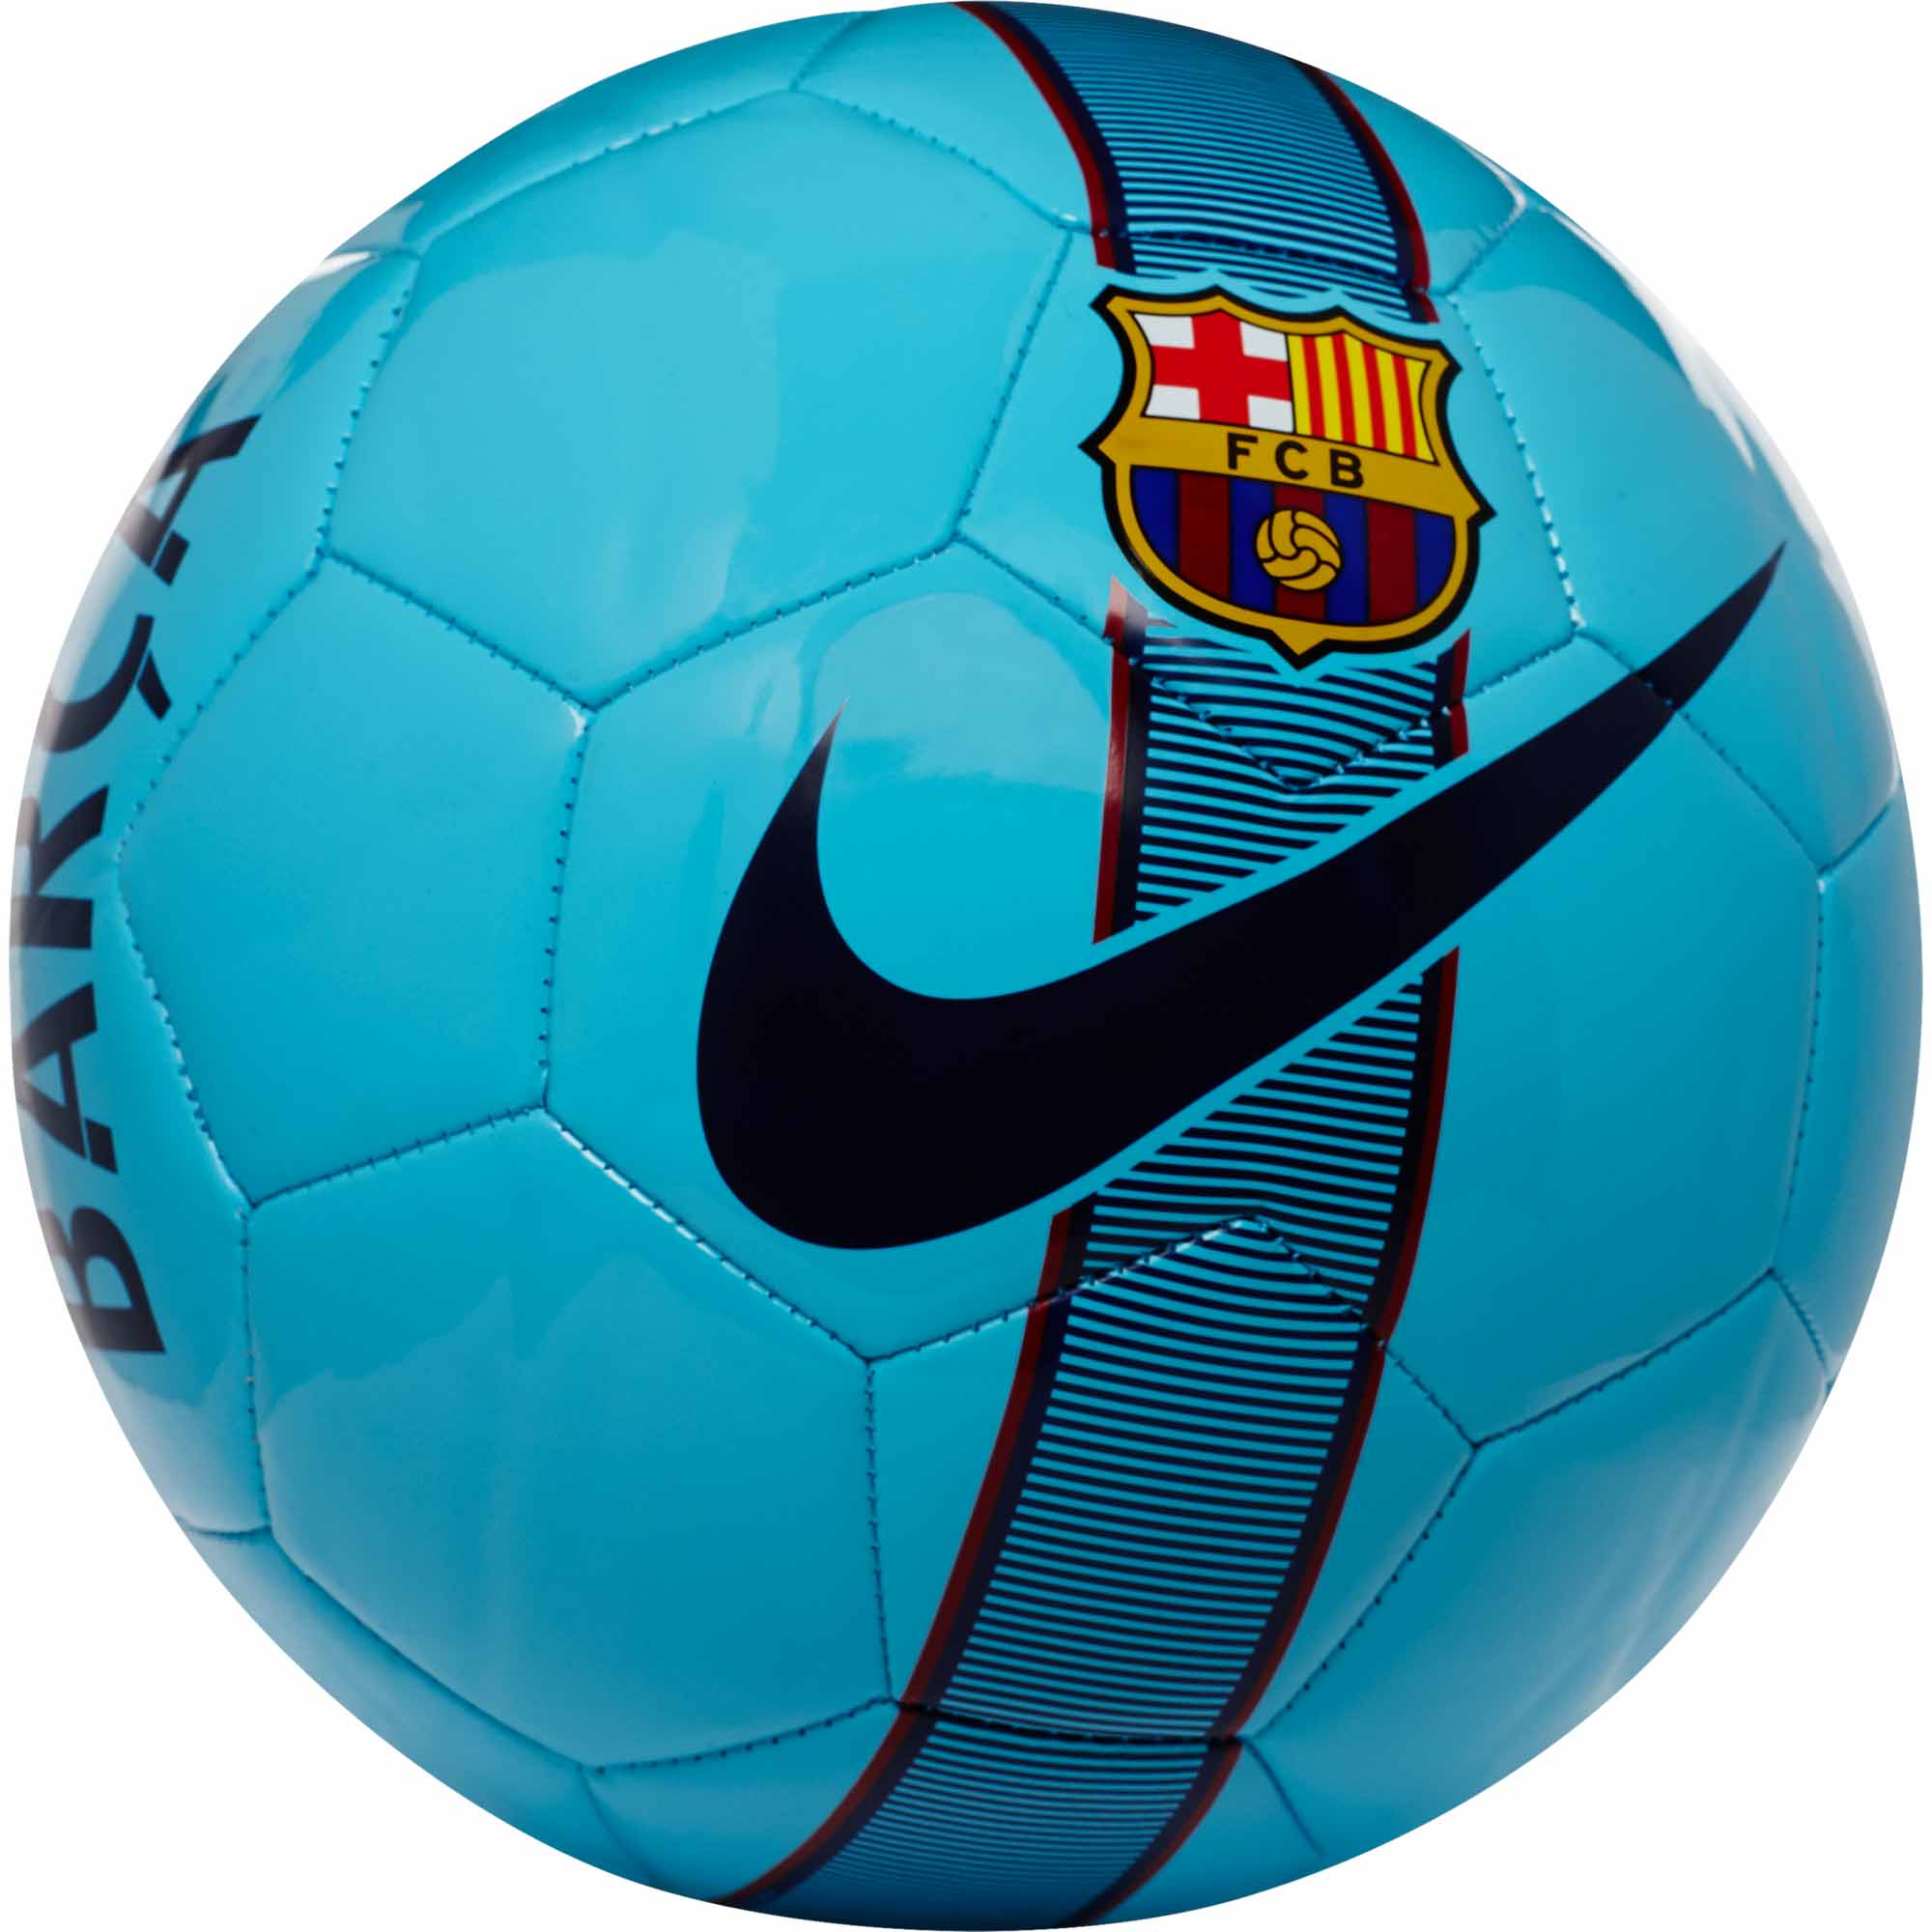 Nike Barcelona Supporters Soccer Ball - Blue & Noble Red - Soccer Master